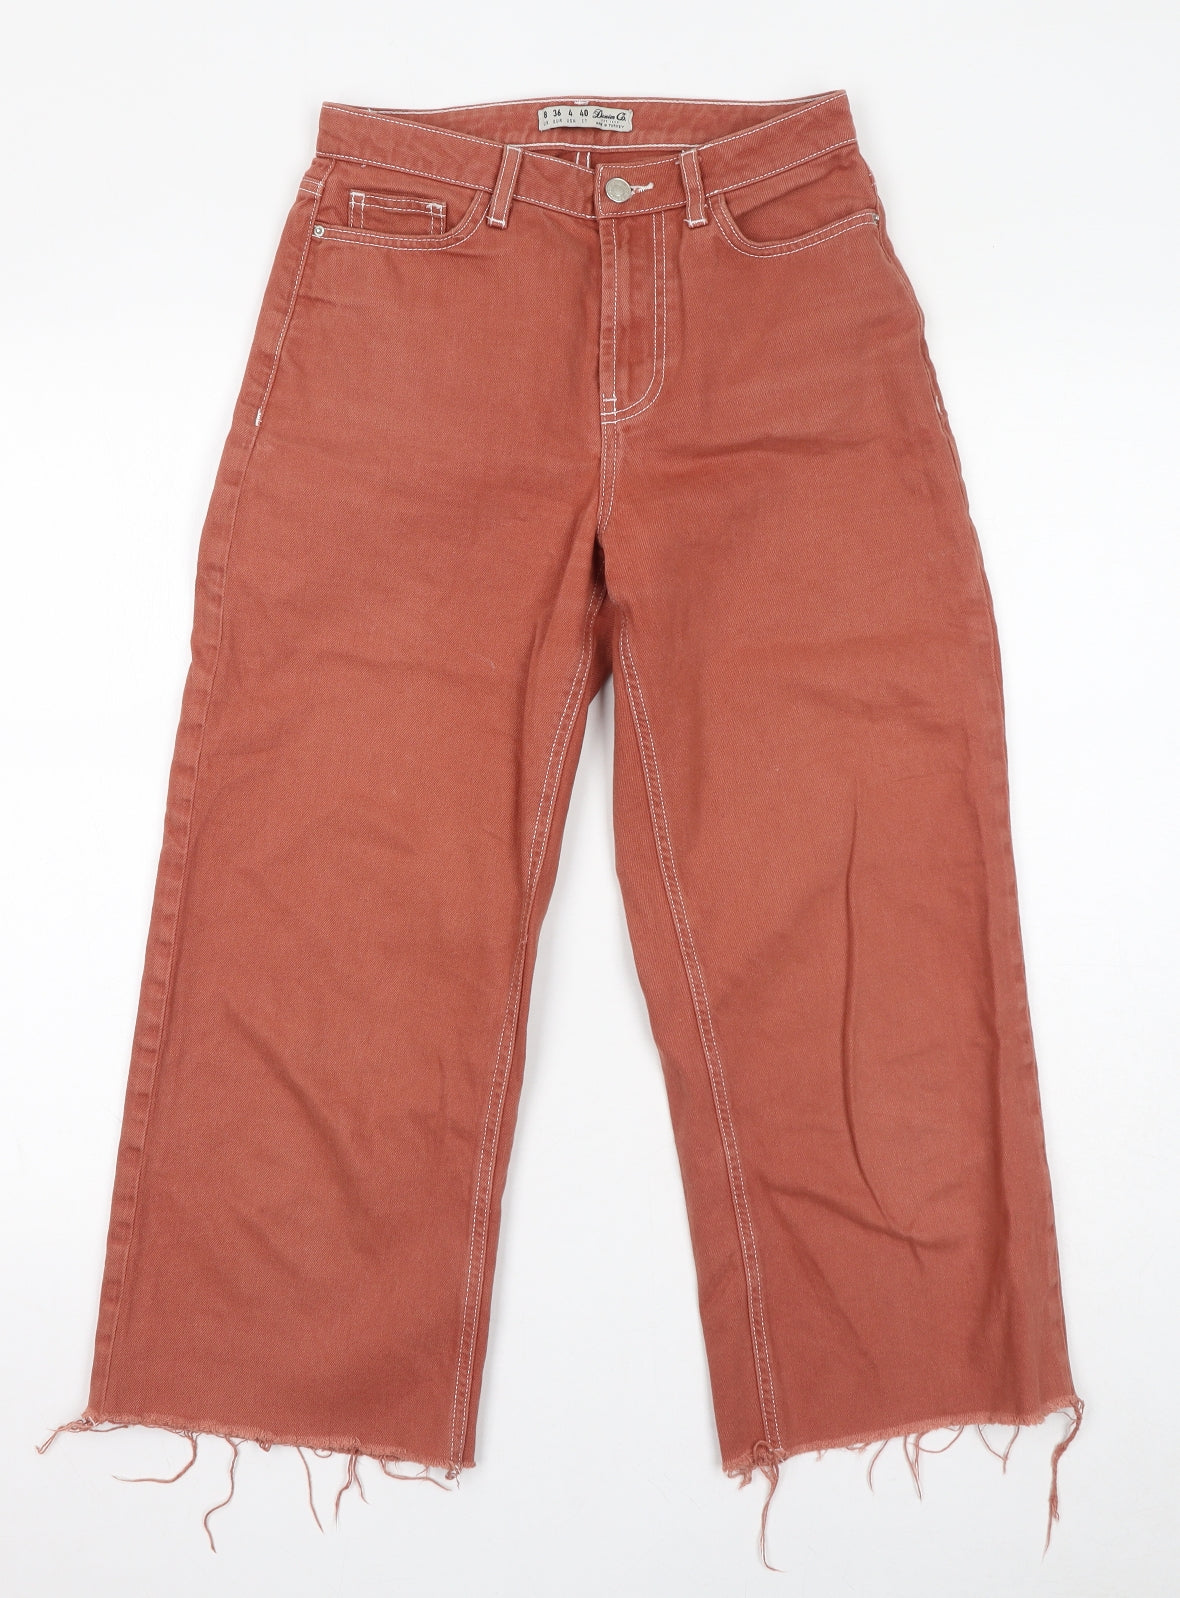 Denim & Co. Womens Orange Cotton Wide-Leg Jeans Size 8 L23 in Regular Zip